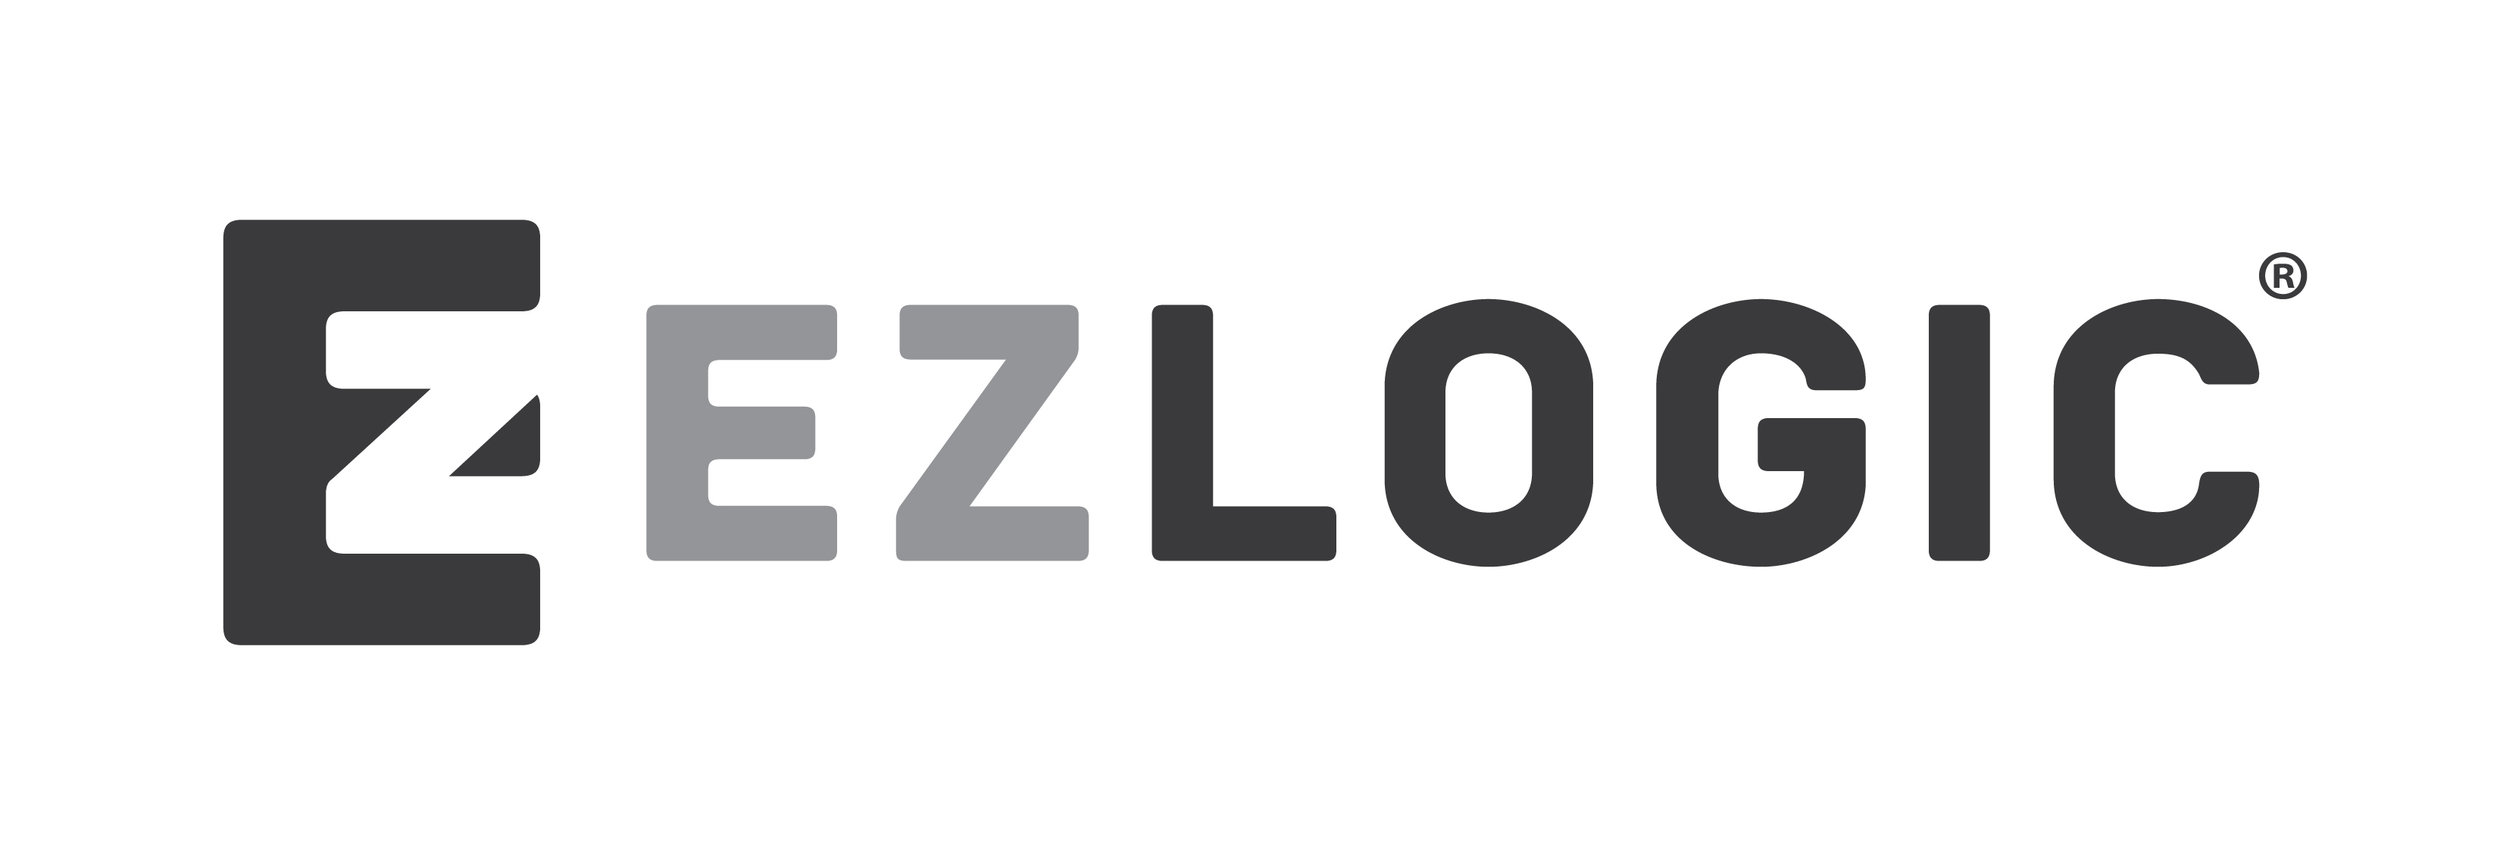 072816 EZLogic Logo - Horizontal-01.jpg